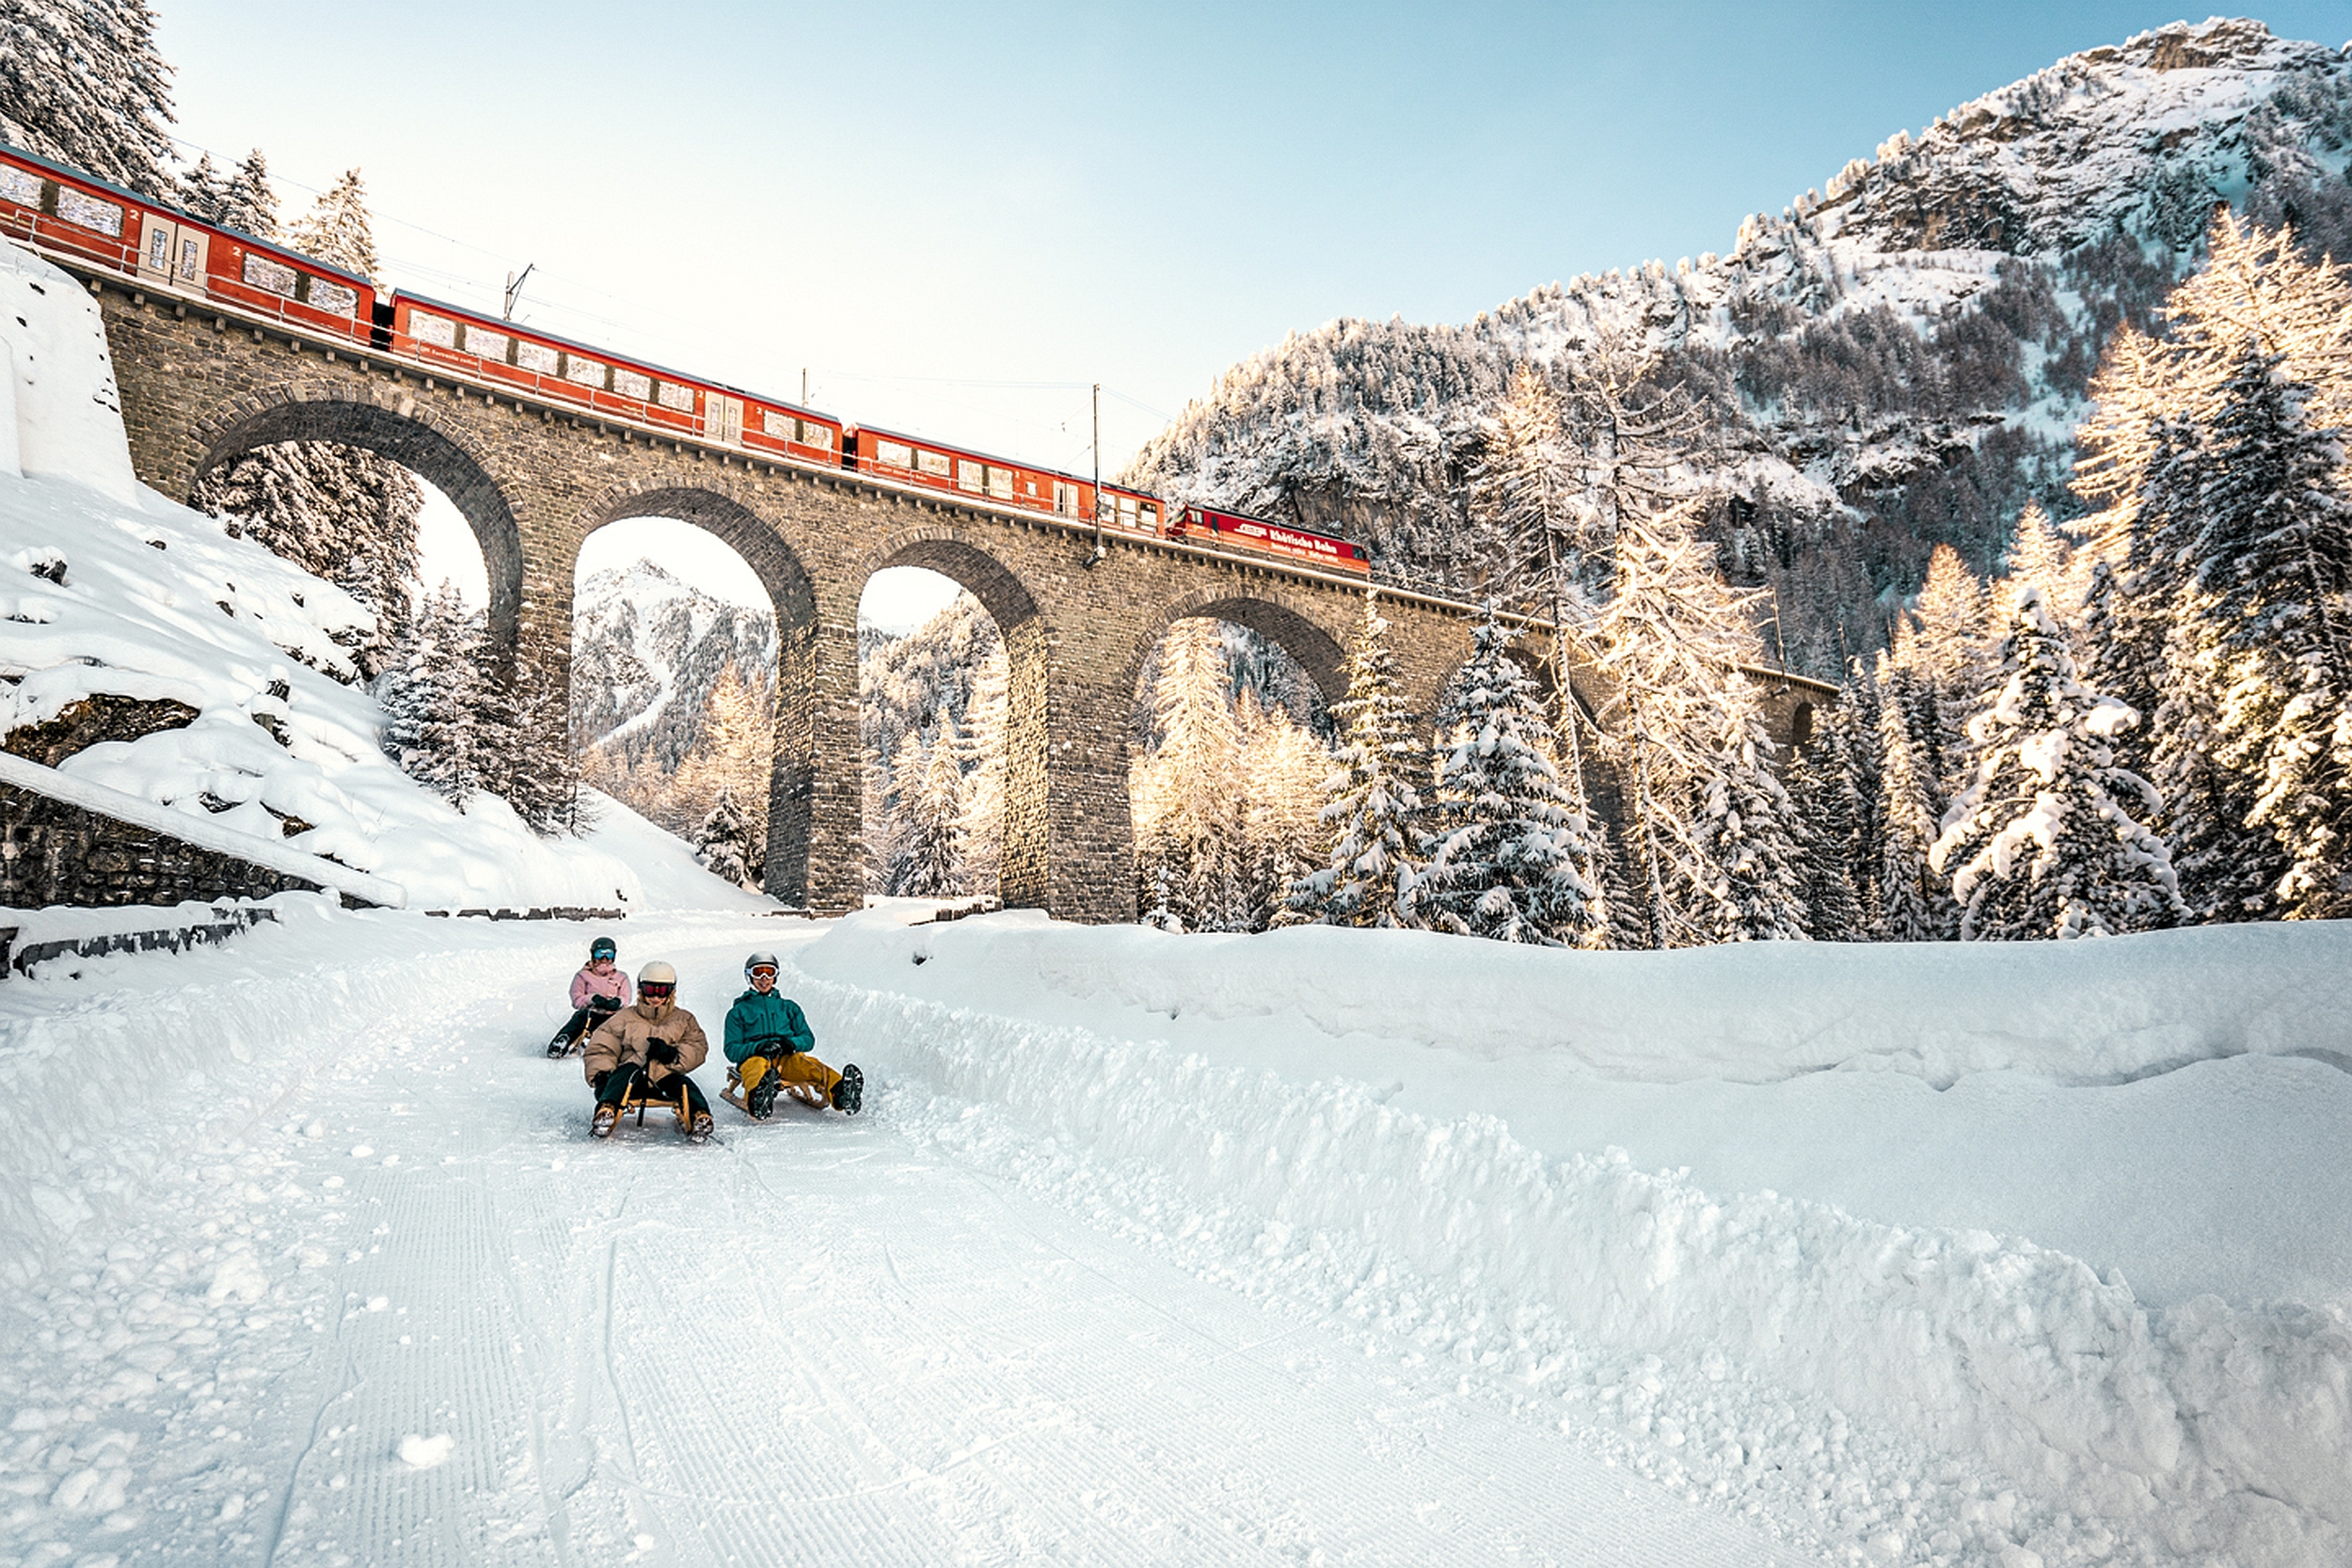 Foto: Switzerland Tourism / Andre Meier